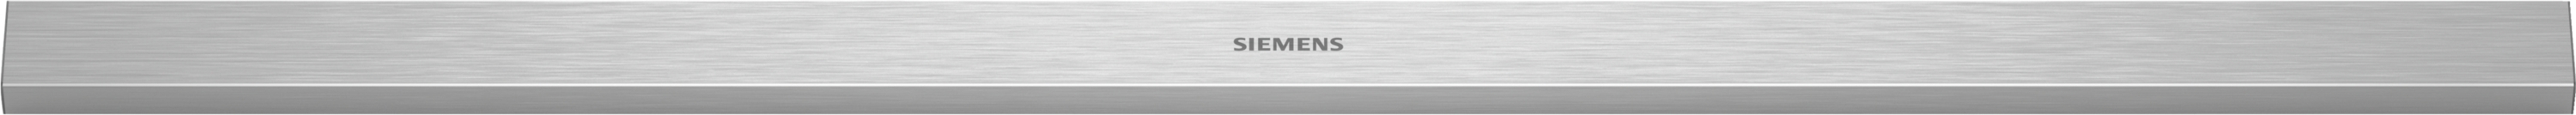 Siemens  LZ49551